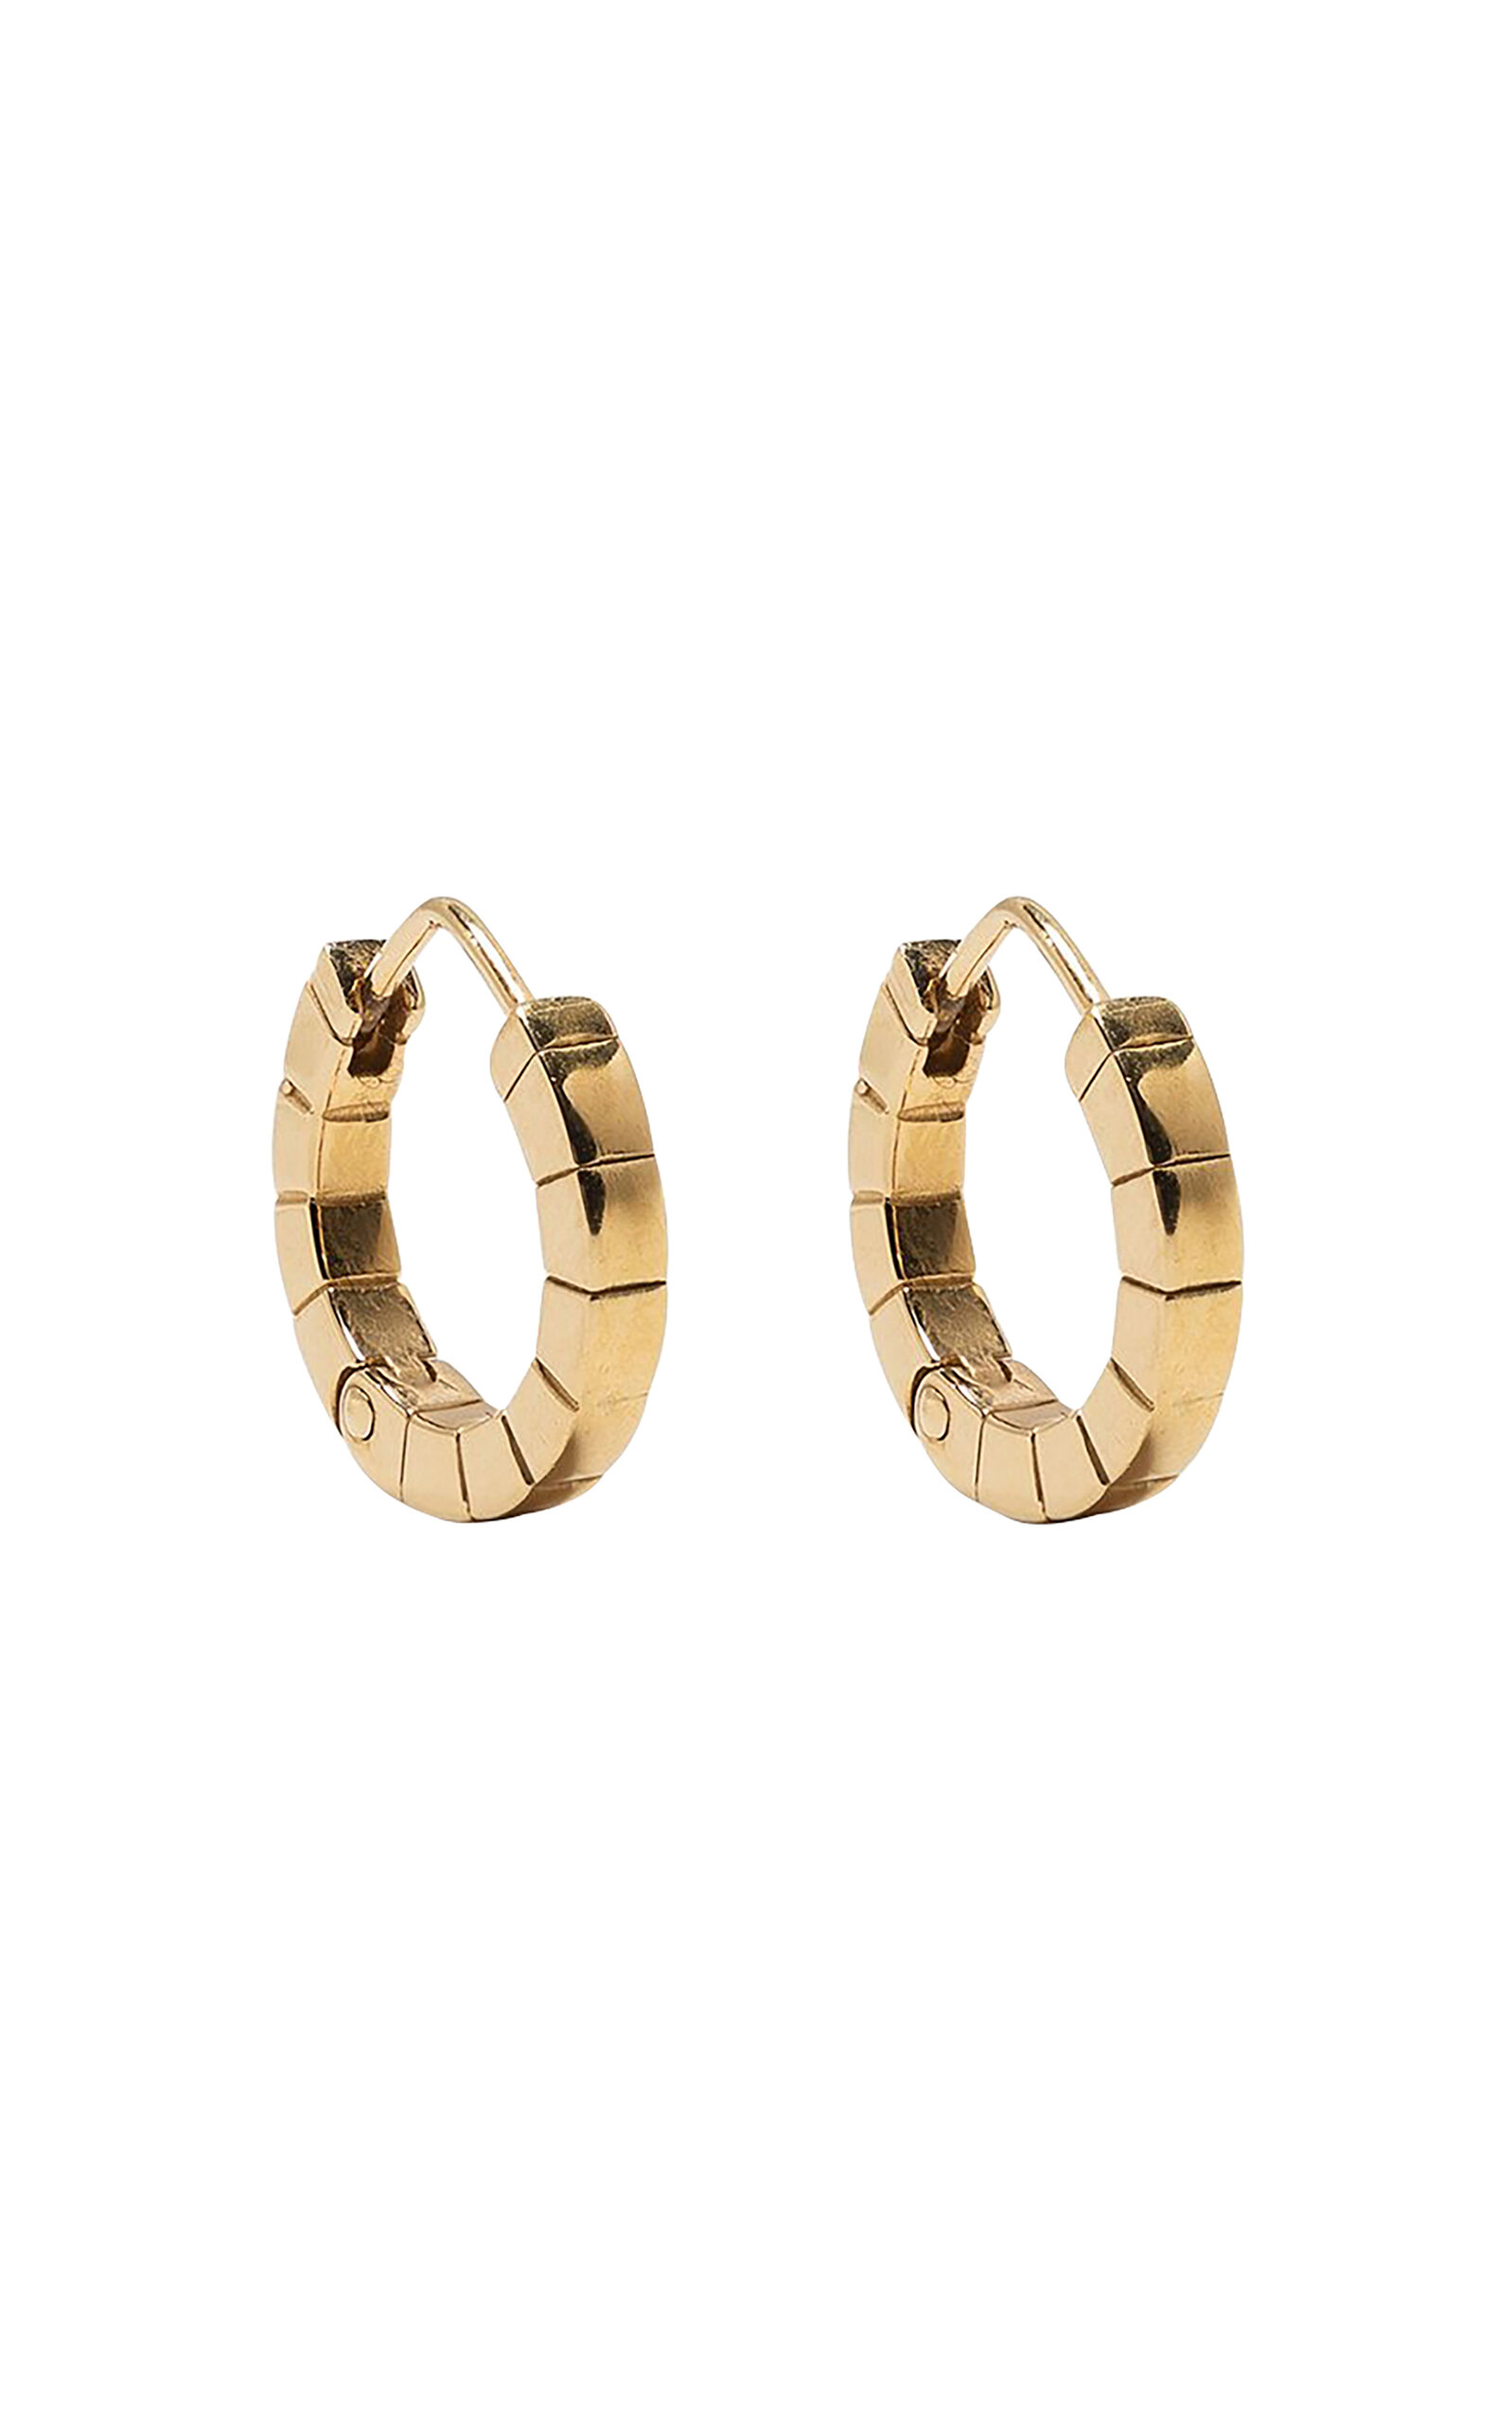 IVI Women's Mini Signore 18k Gold-Plated Earrings